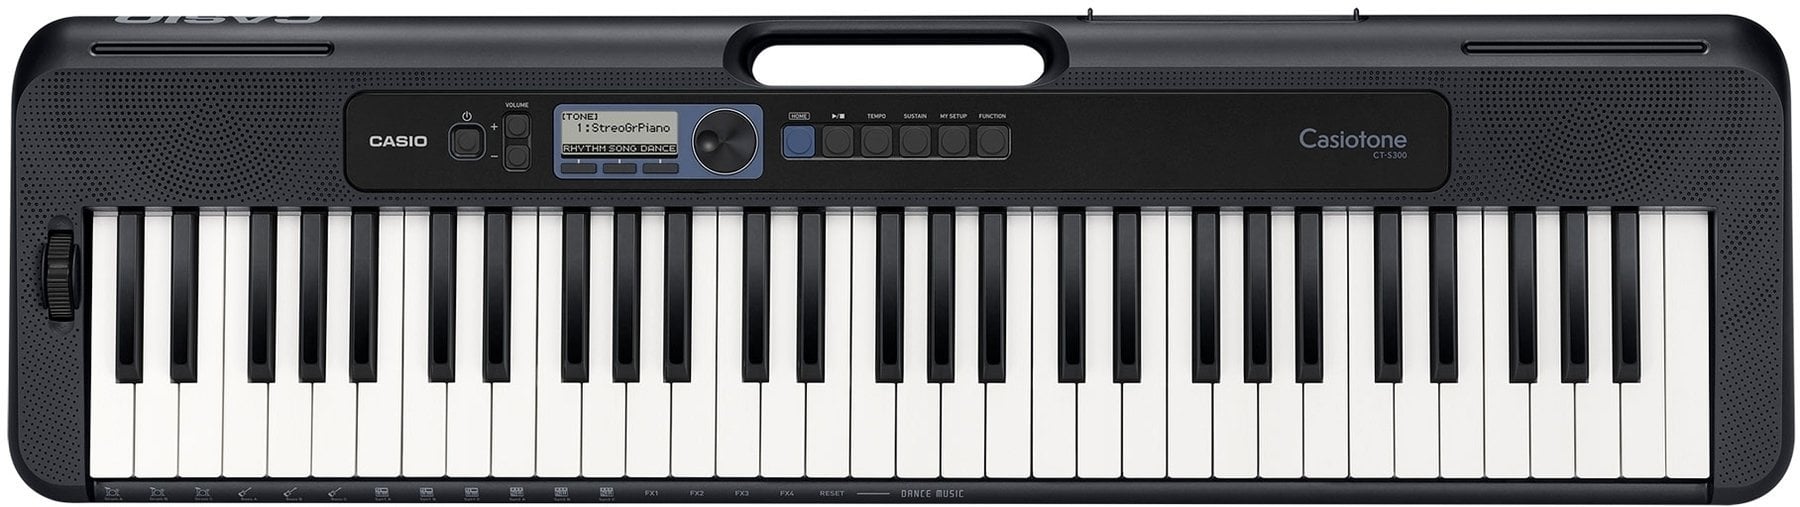 Keyboard met aanslaggevoeligheid Casio CT-S300 (Alleen uitgepakt)